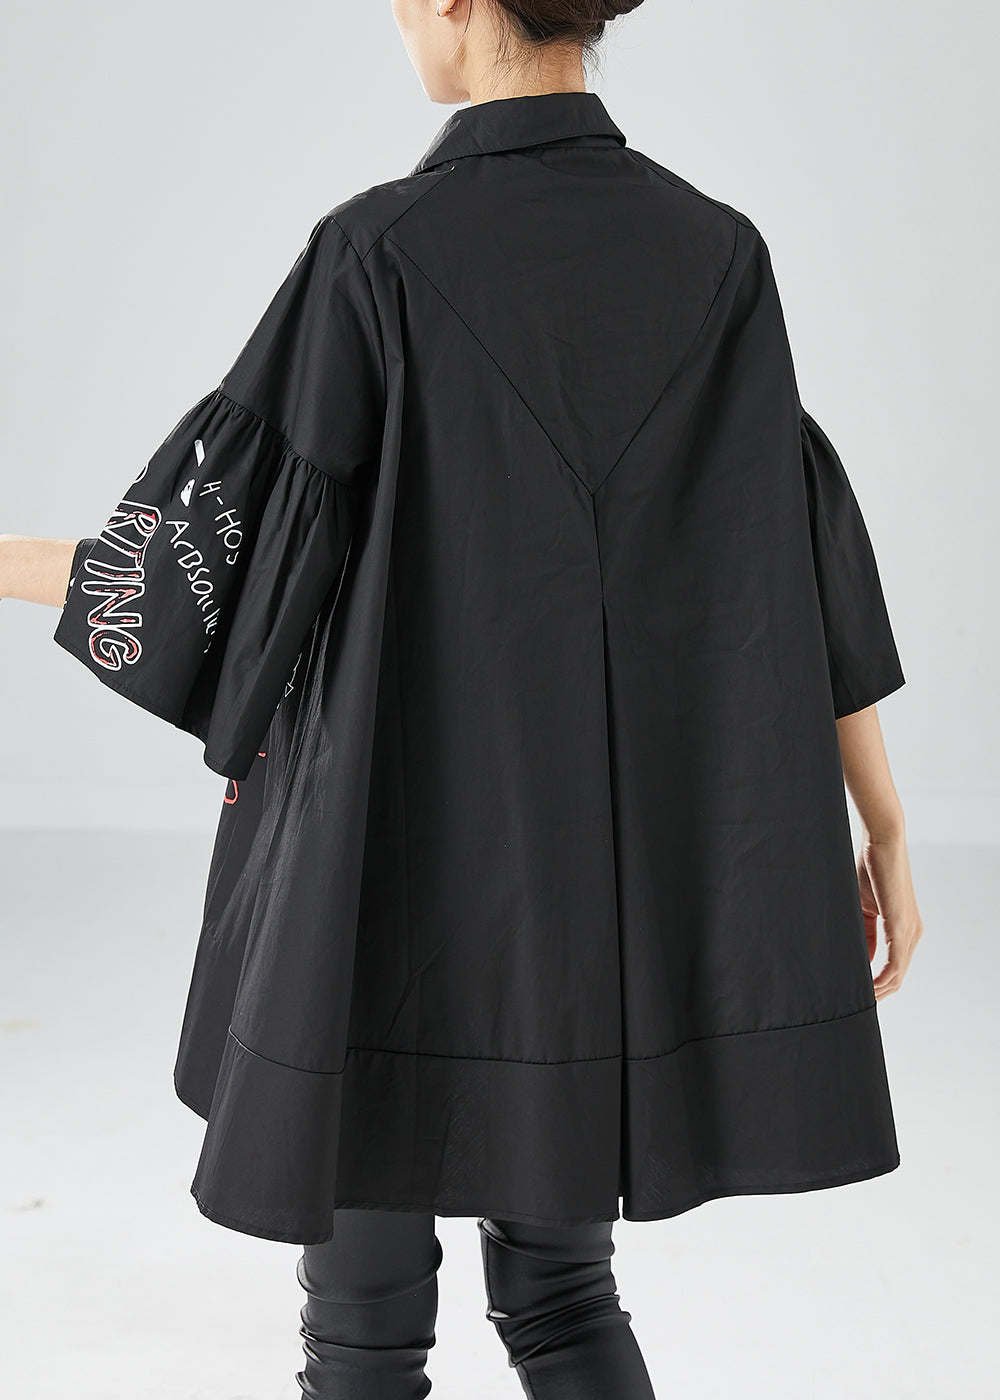 Stylish Black Oversized Patchwork Print Cotton Shirt Top Puff Sleeve LY6118 - fabuloryshop